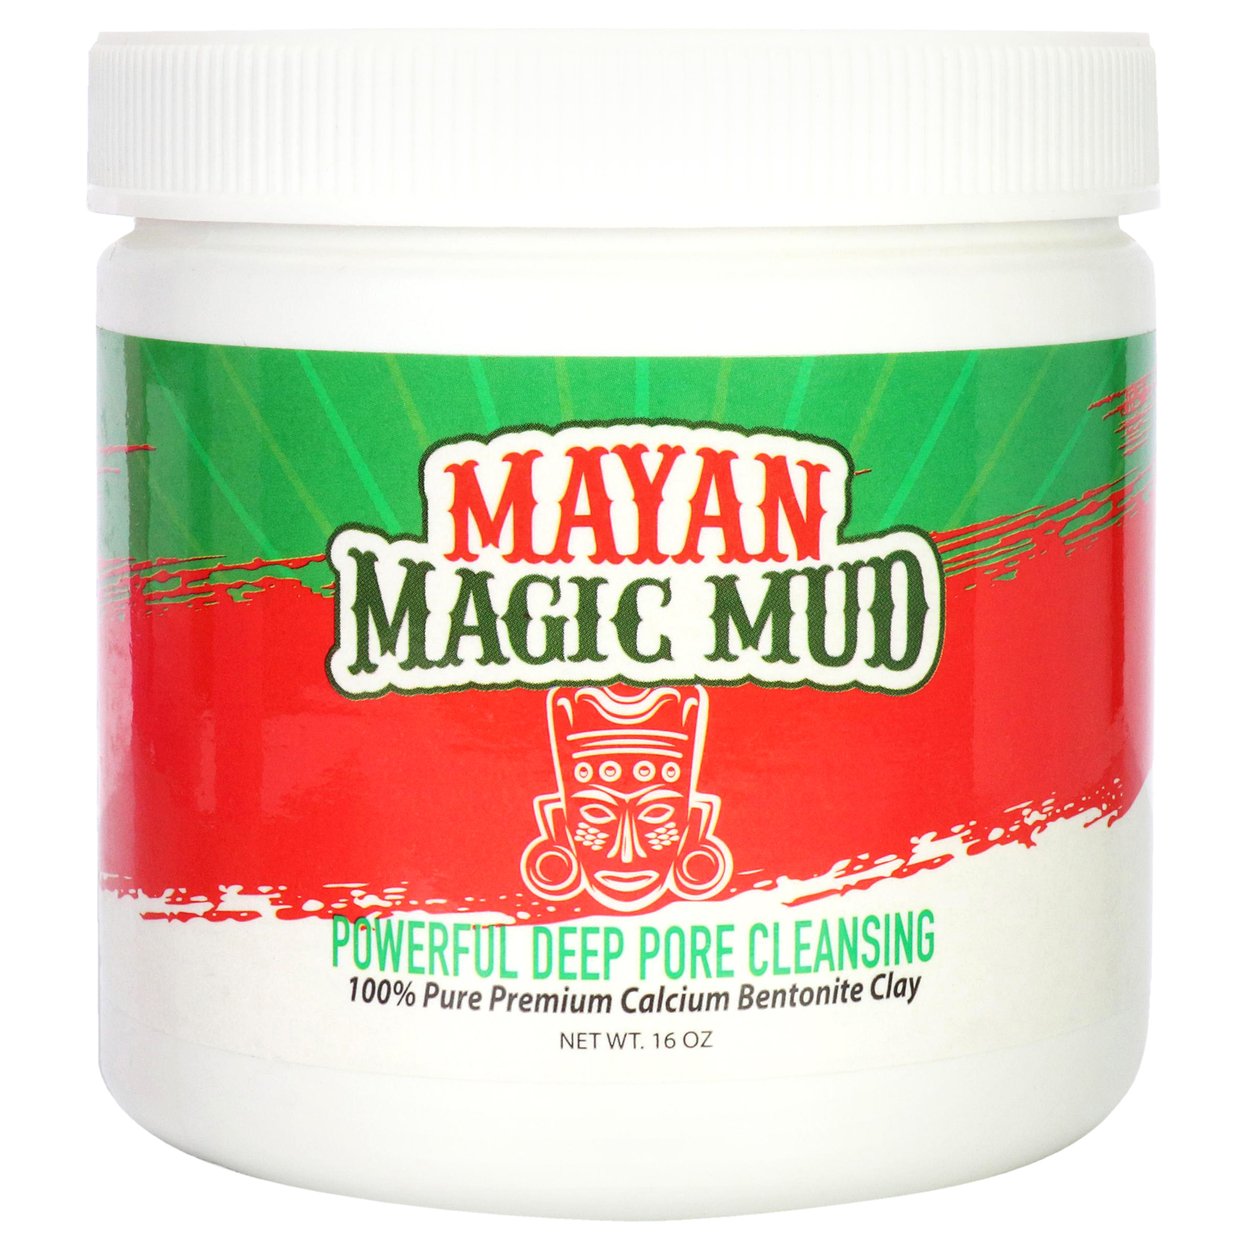 Mayan Magic Mud Powerful Deep Pore Cleansing Clay Cleanser 16 Oz